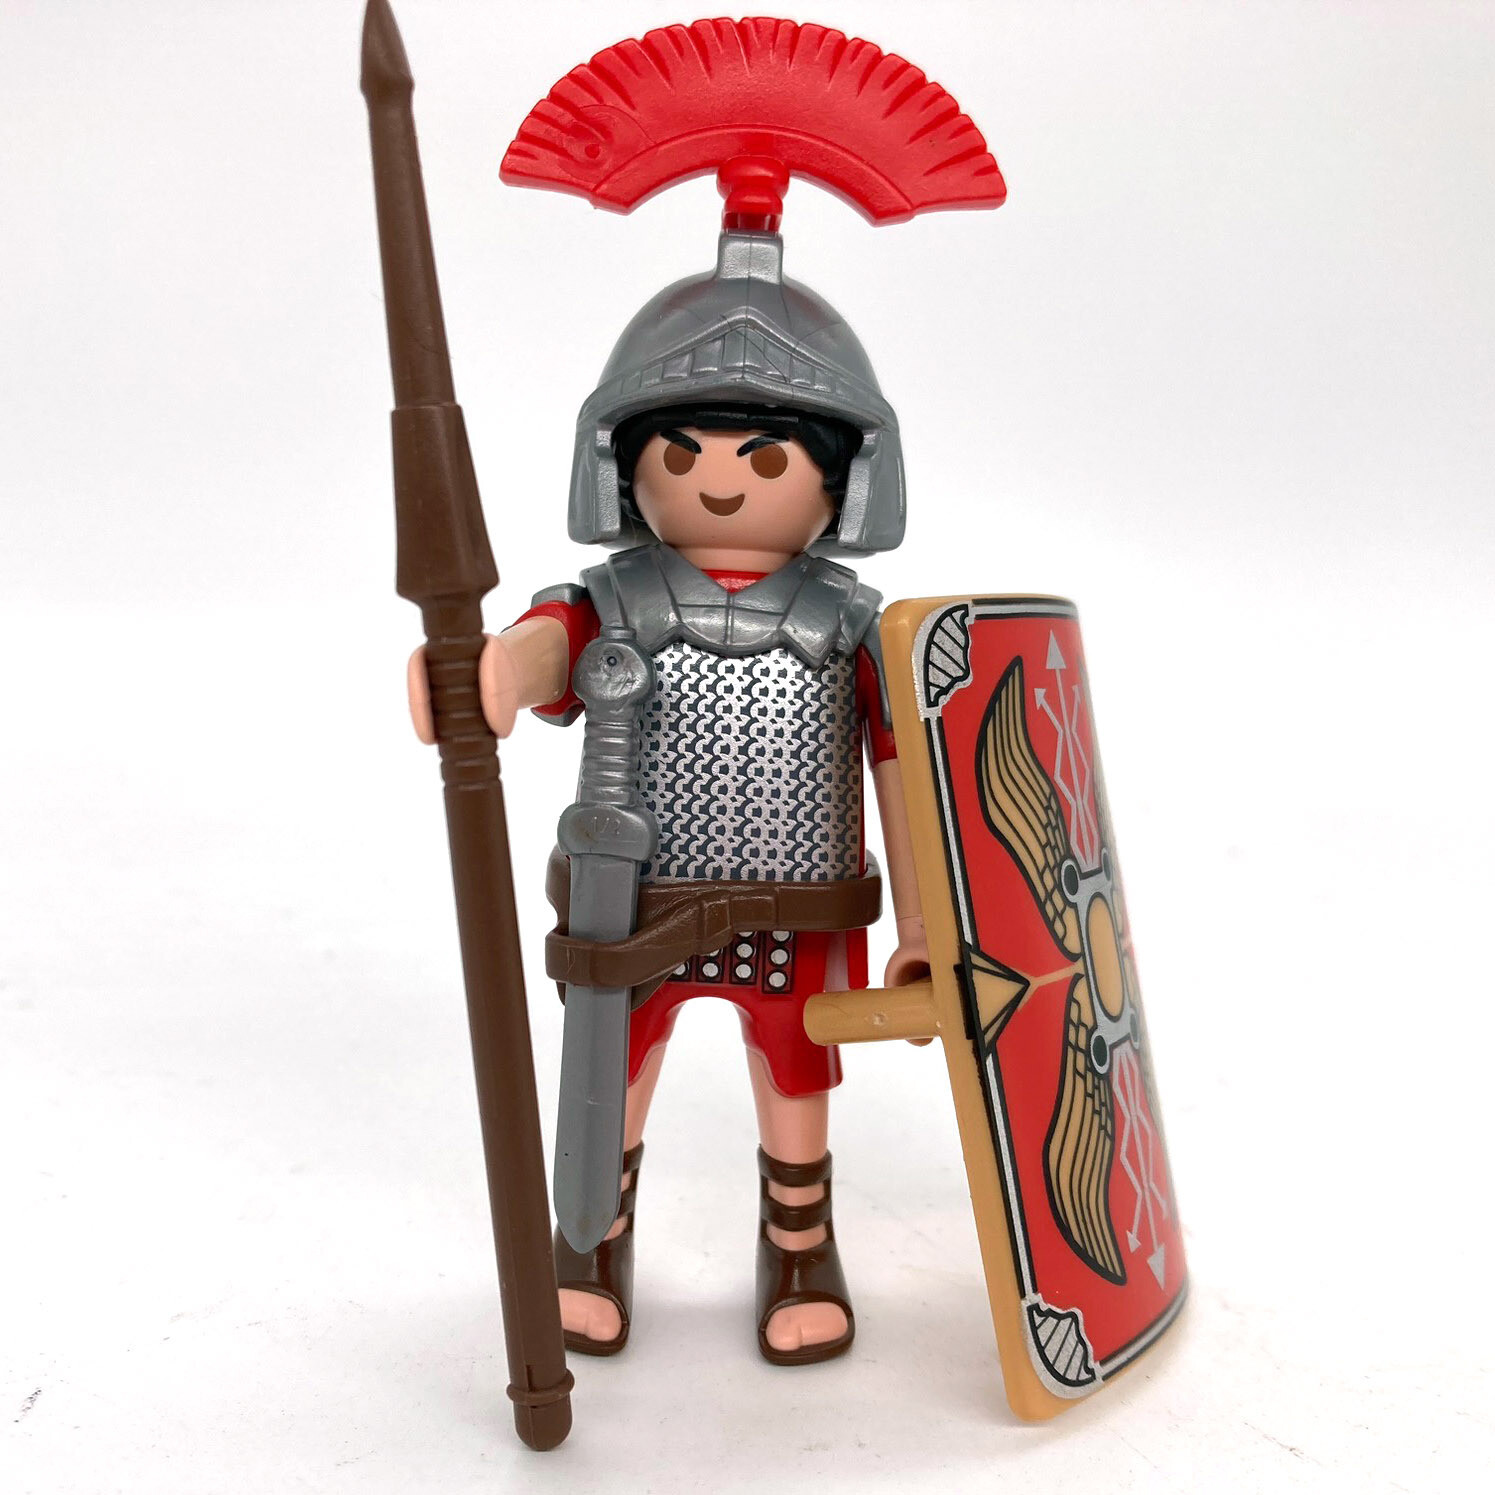 Playmobil legionnaire romain